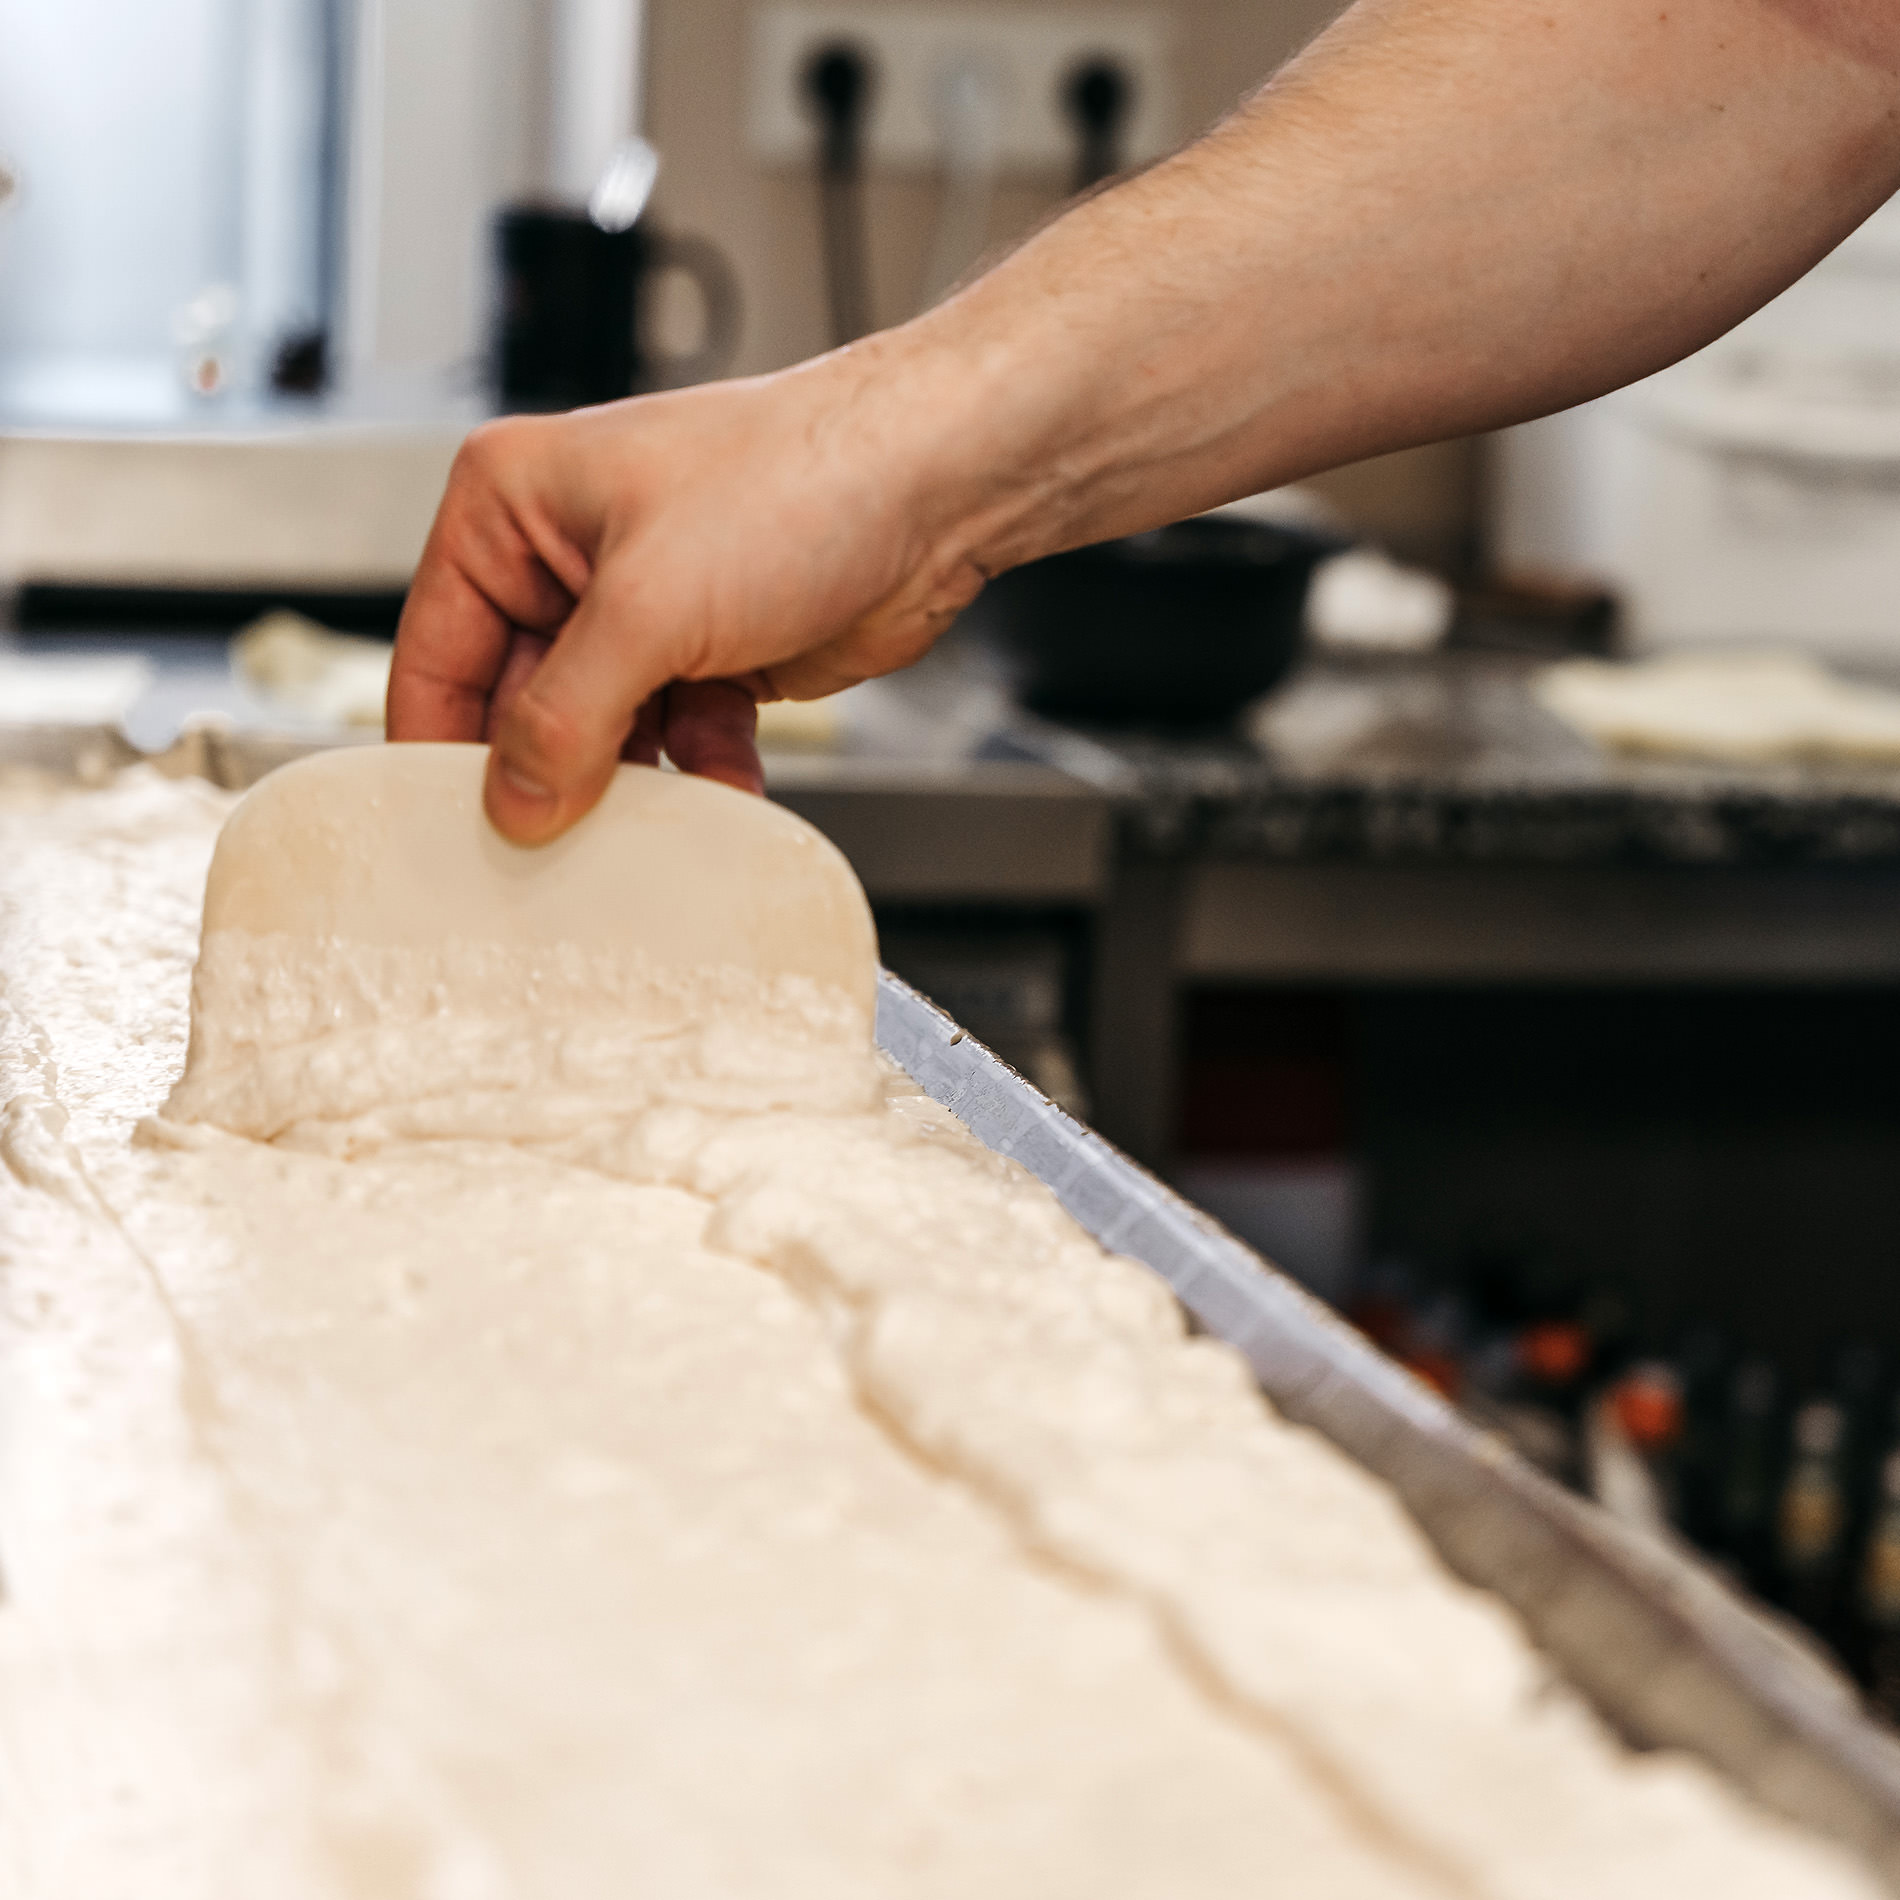 It all starts with a good dough | GROCH & ERBEN